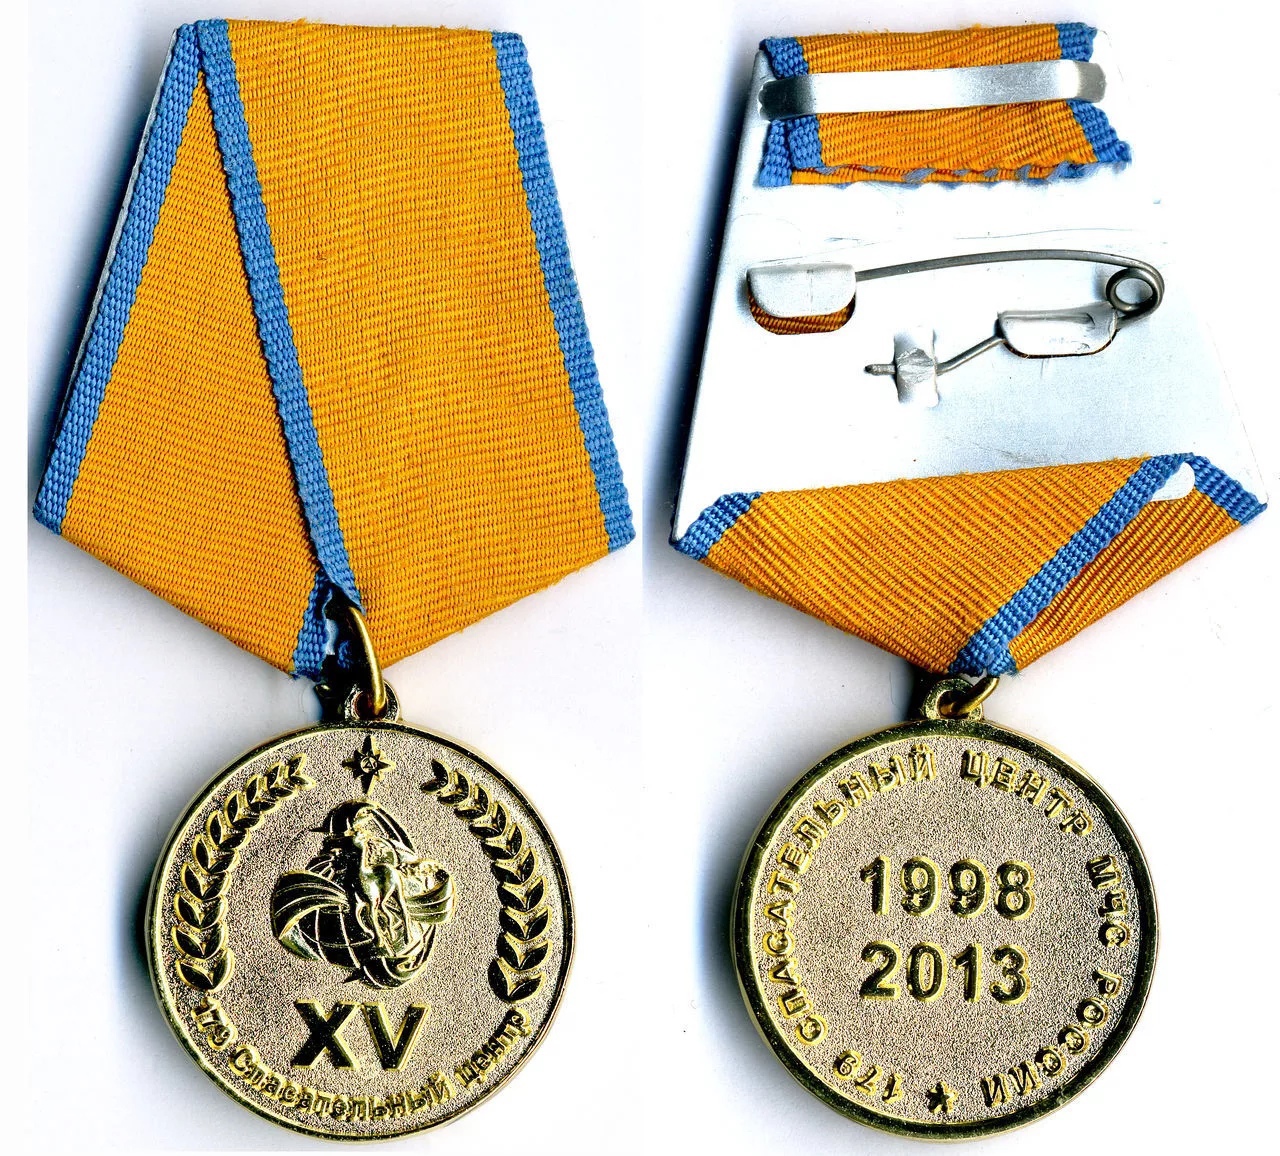 XV лет 179 СПАС ЦЕНТРУ 1998-2013